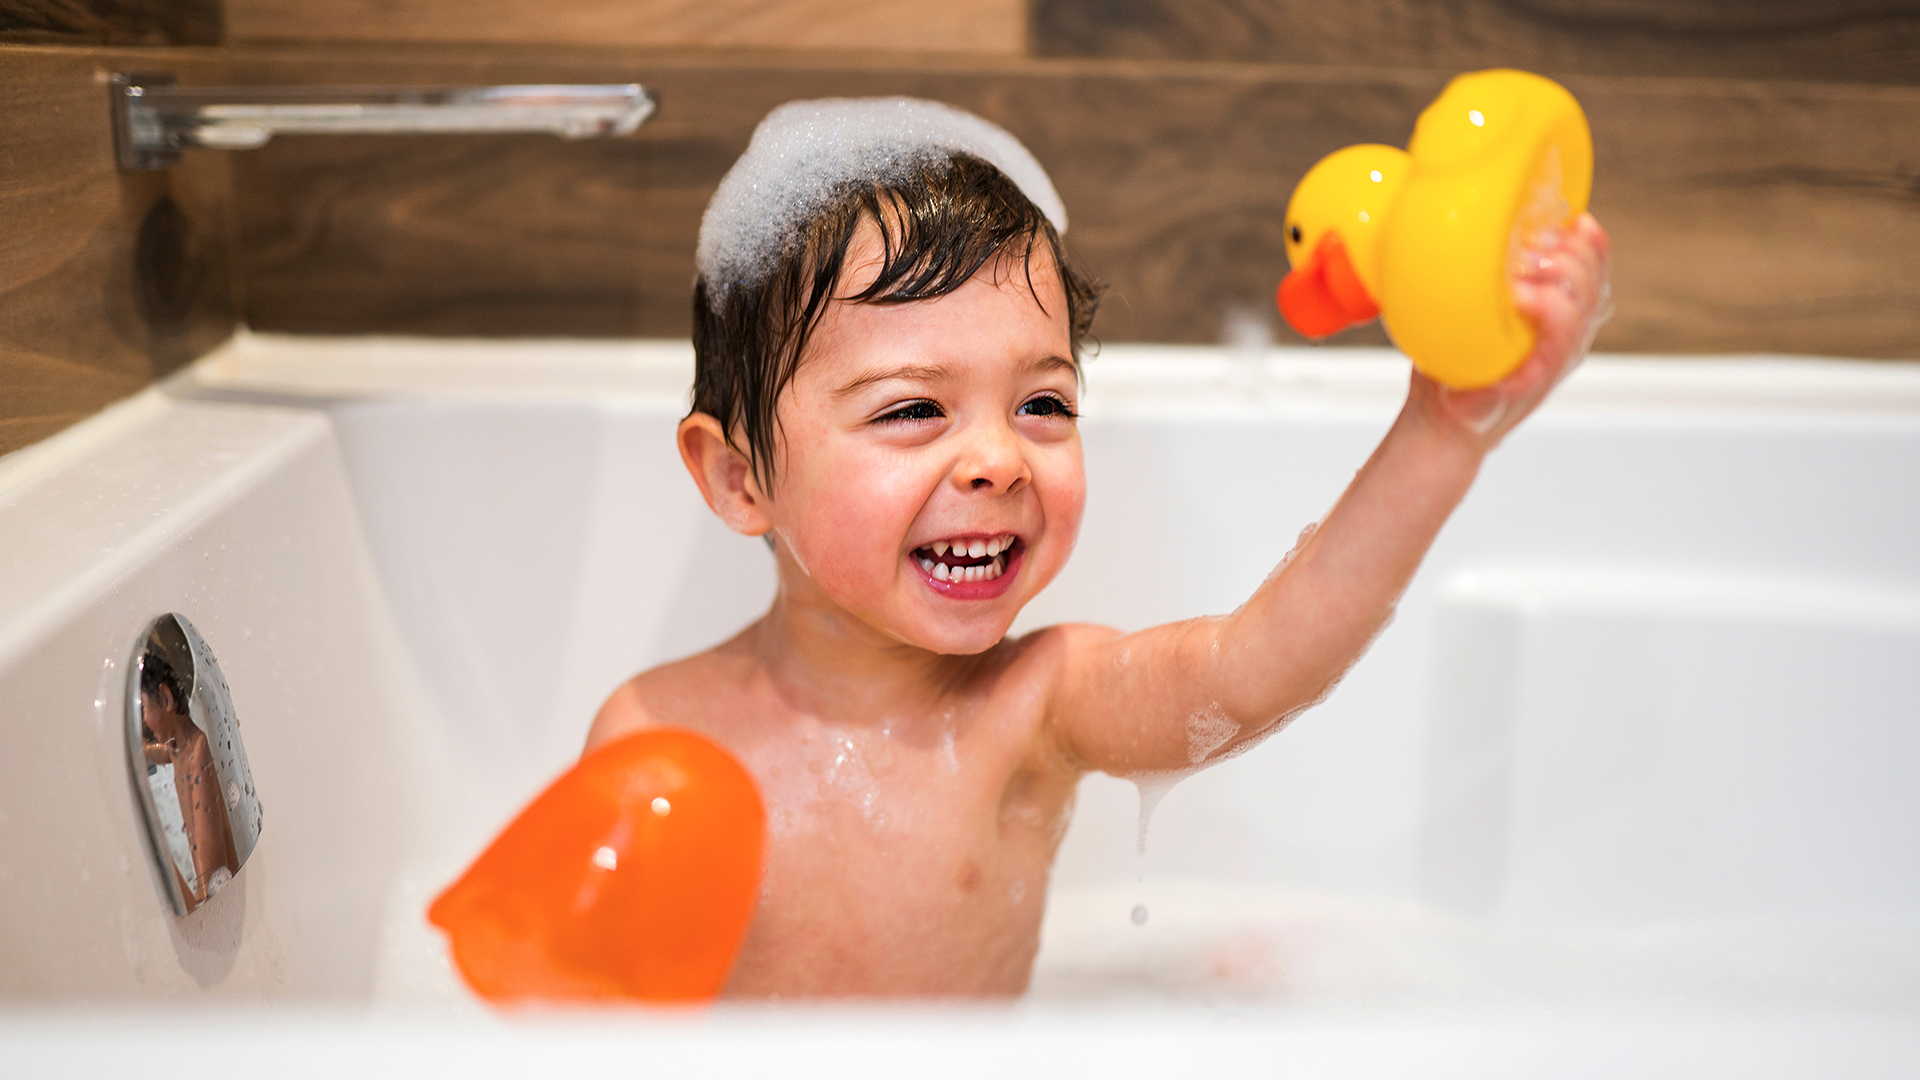 https://www.rog3.com/wp-content/uploads/2022/07/Clean-Bathrub-for-a-child-with-best-bathtub-cleaner.jpg